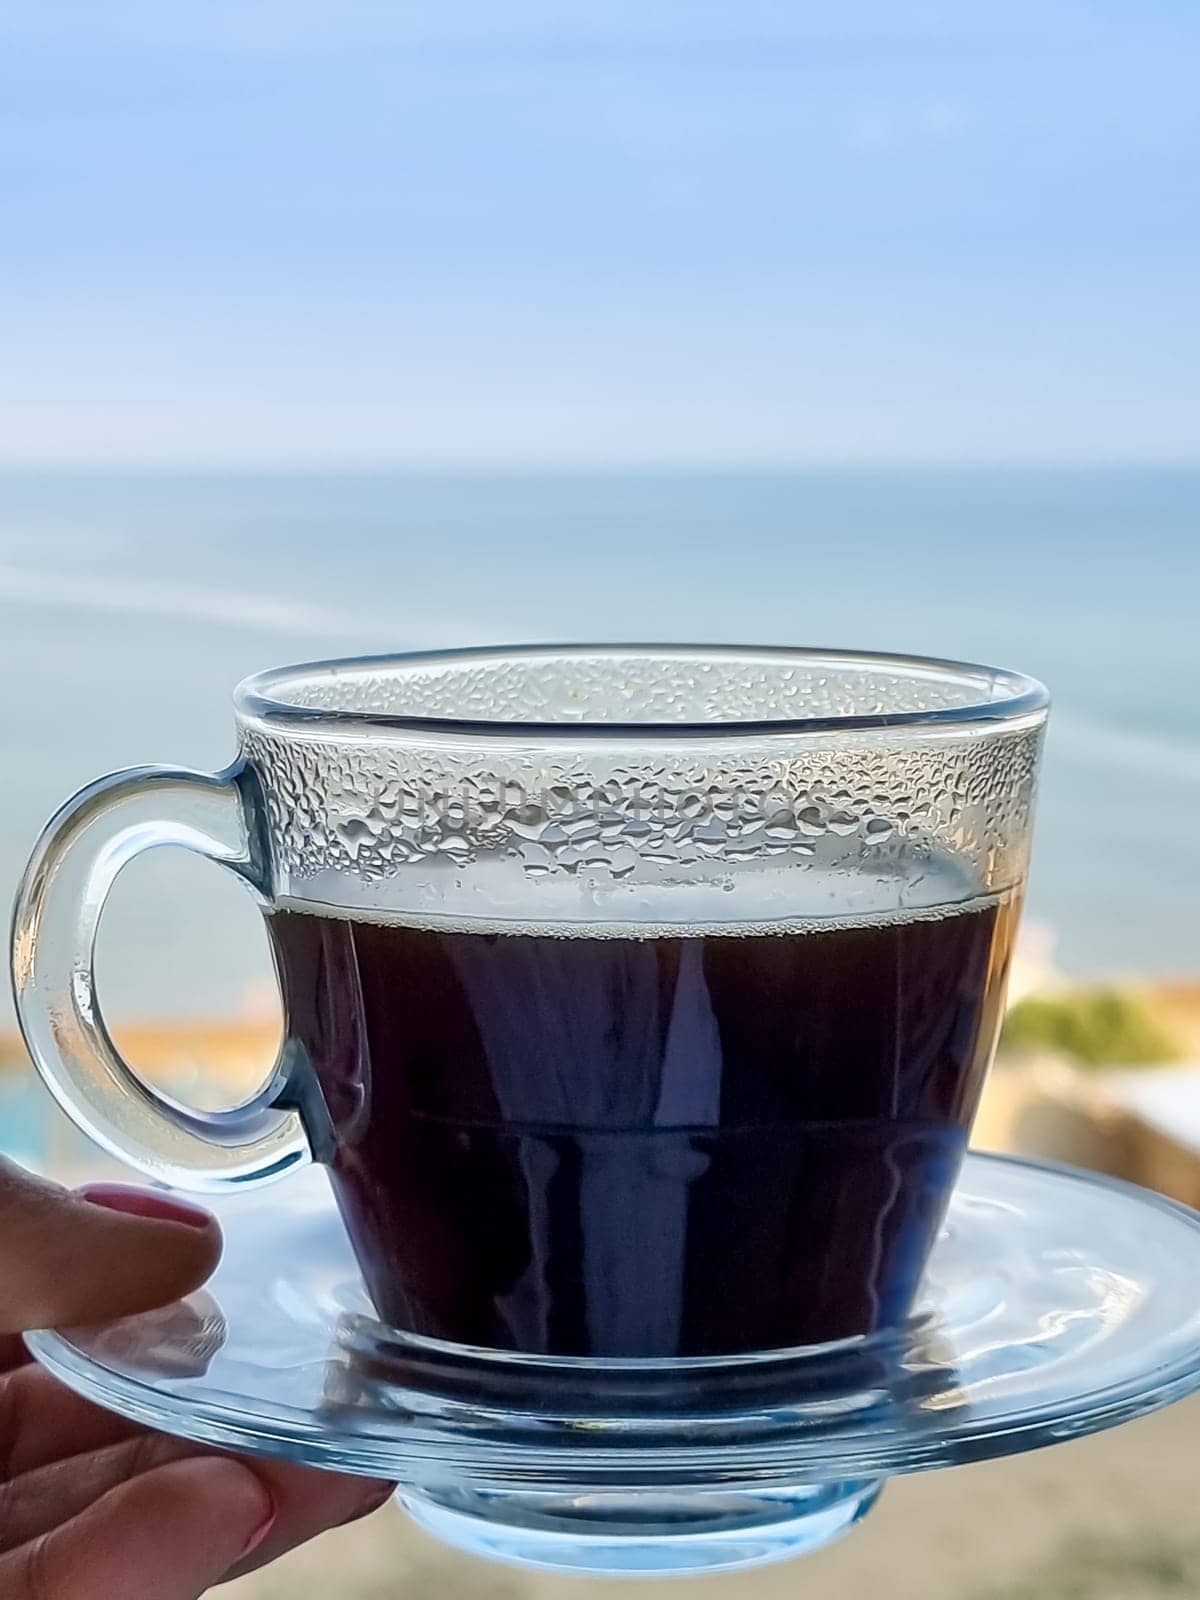 White coffee mug in man hand on terrace overlooking sea or ocean. Enjoying morning coffee on paradise island